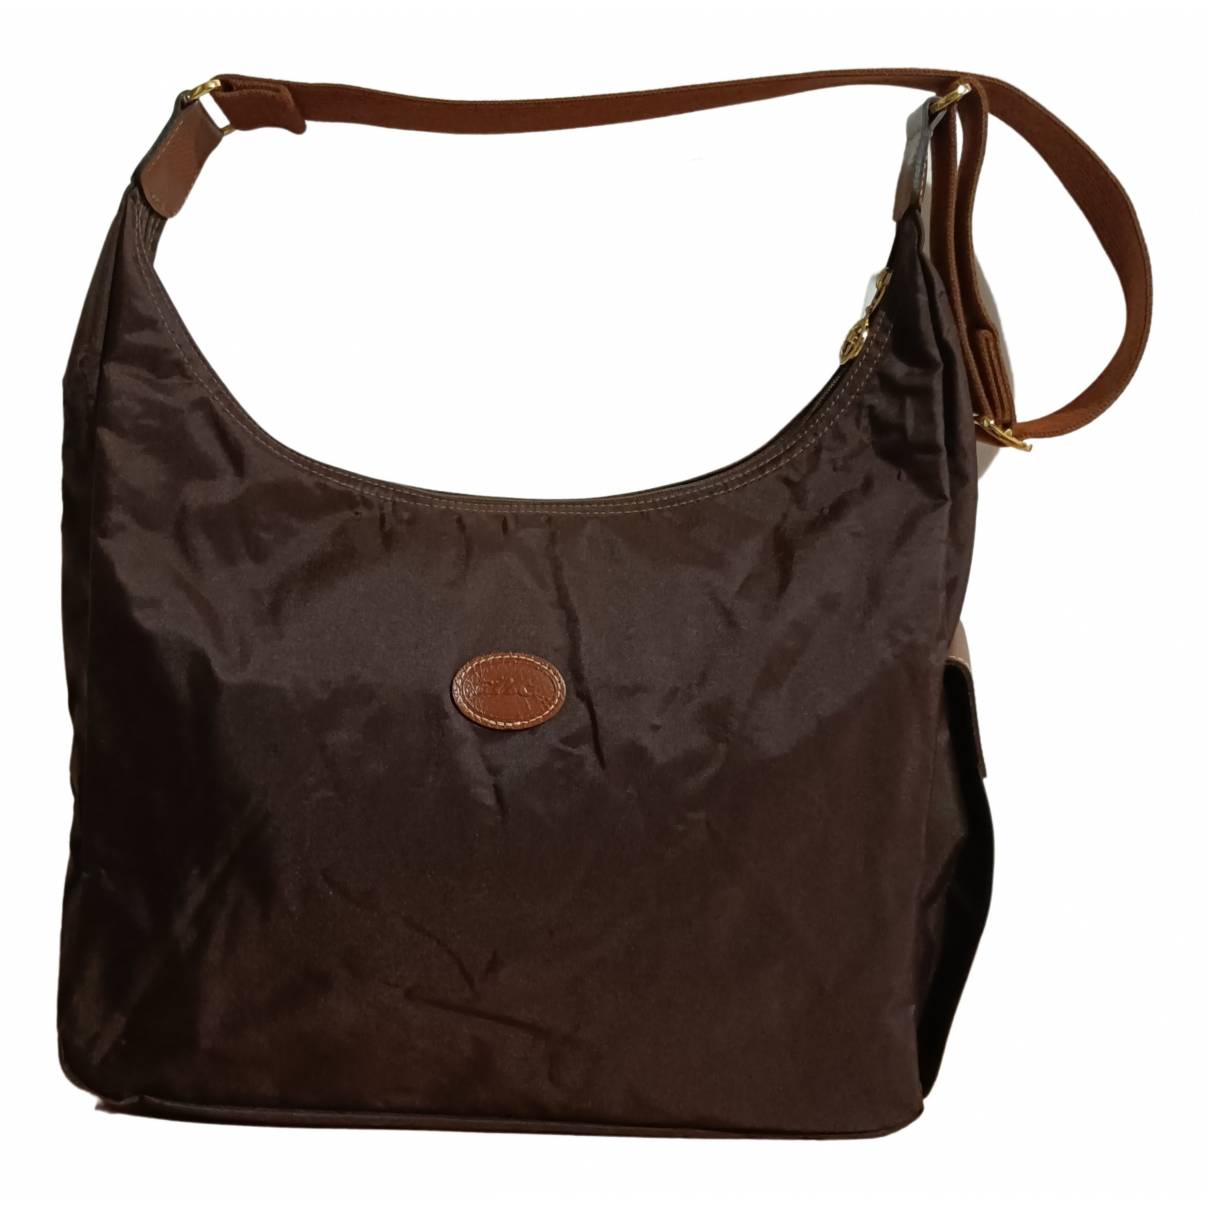 longchamp hobo sling bag